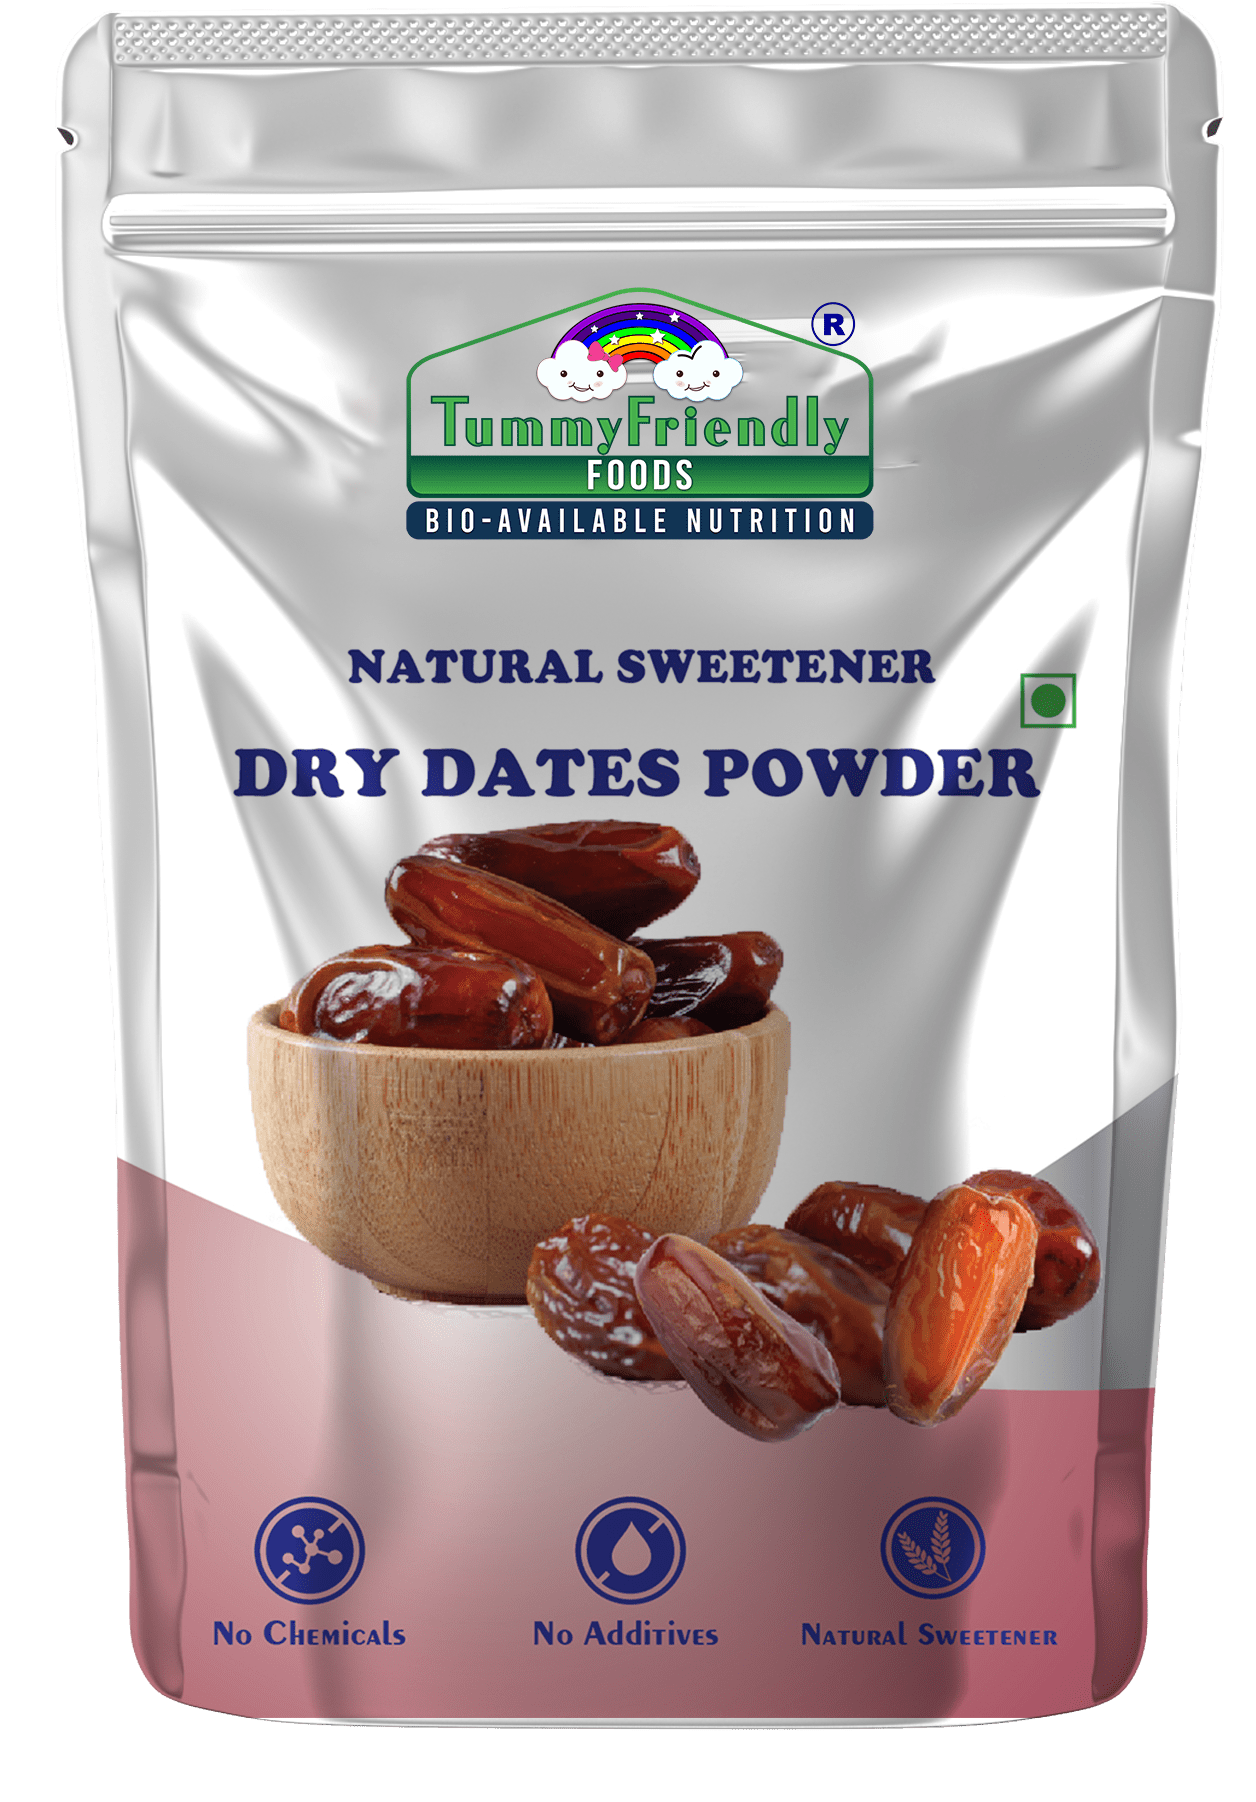 Dry Dates Powder | Organic | Premium Arabian Dates | No Sugar | 200g - Suspire